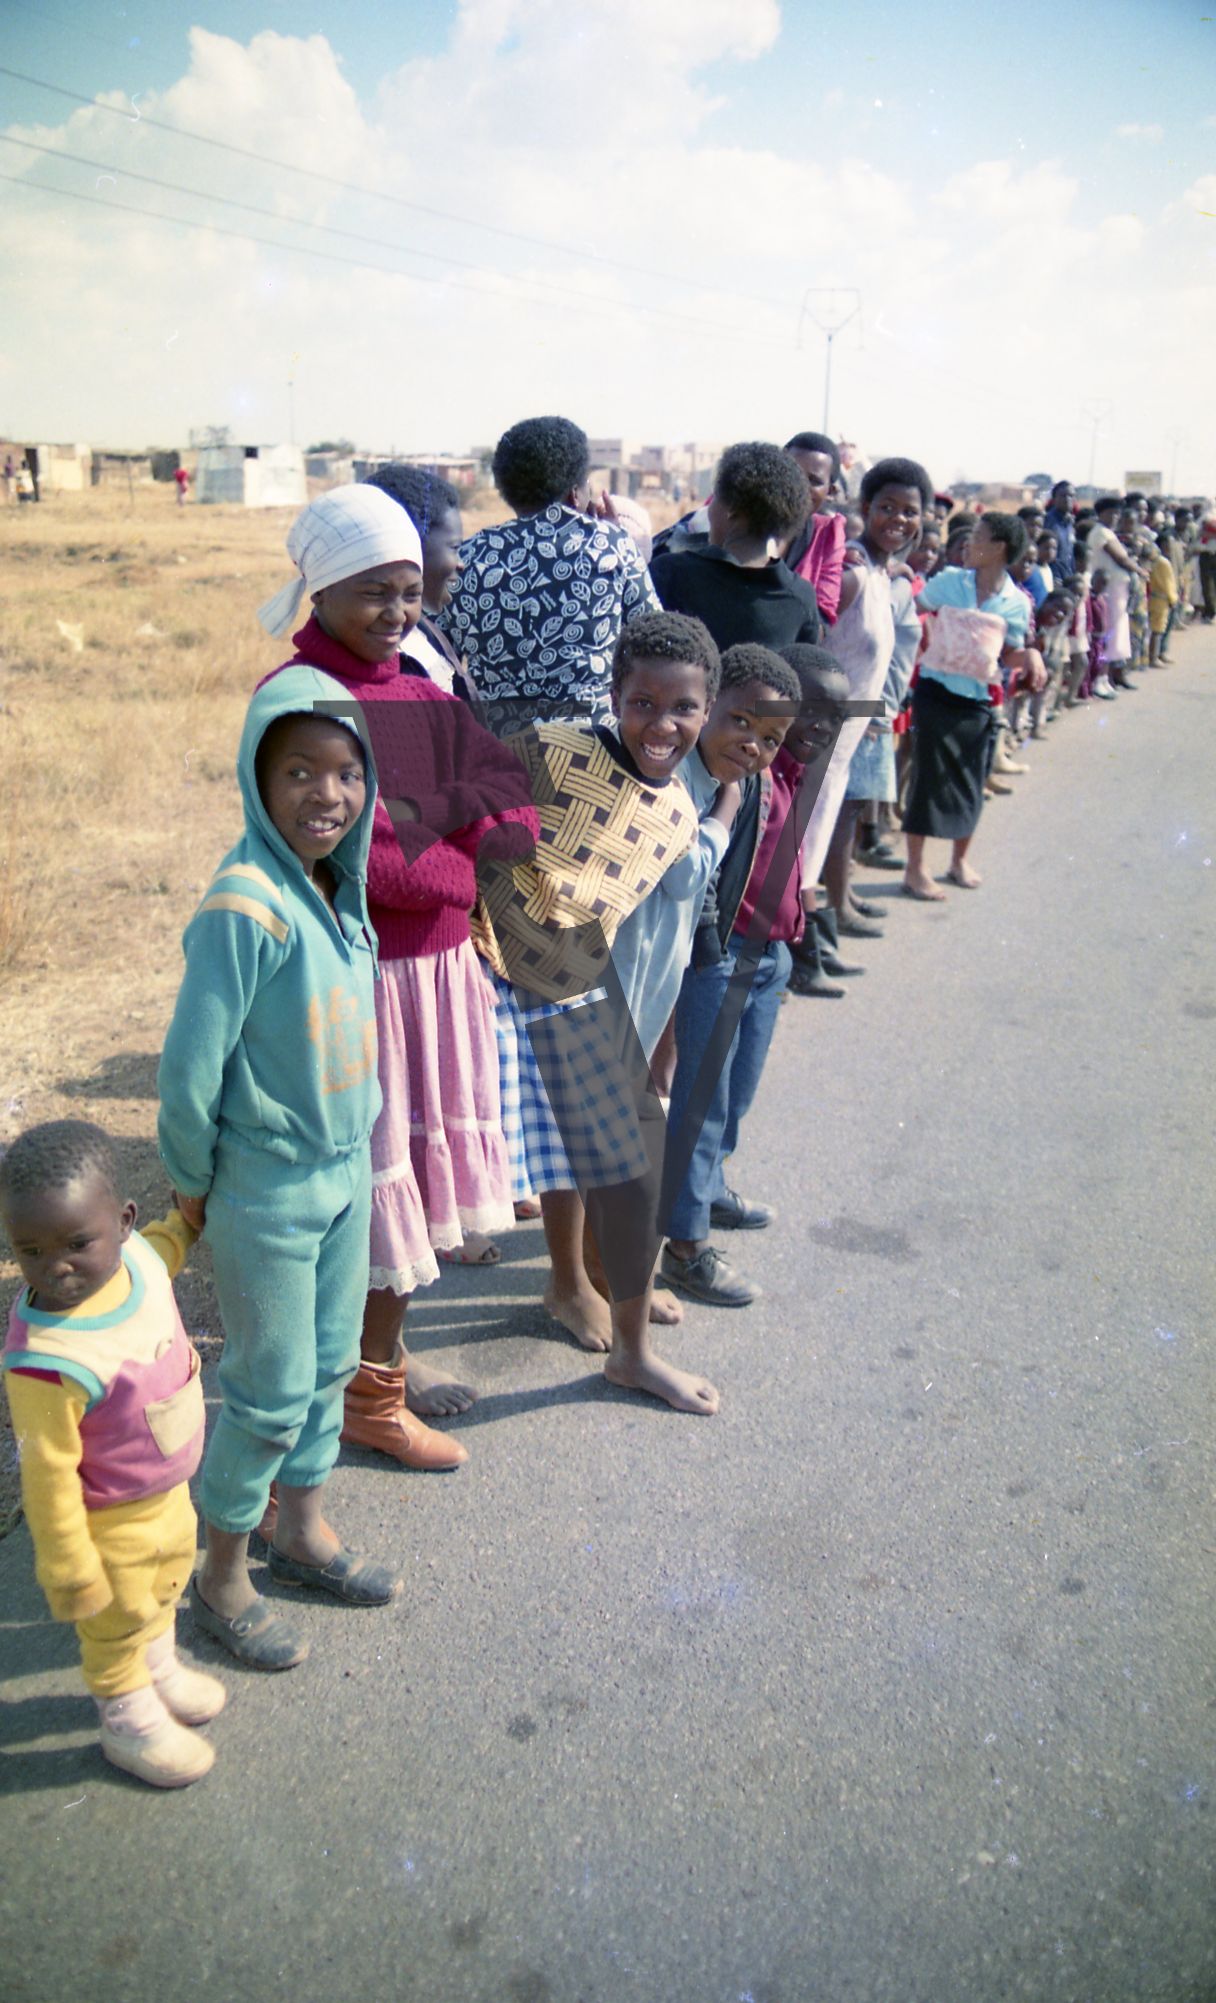 South Africa, line of parade spectators, women, children.